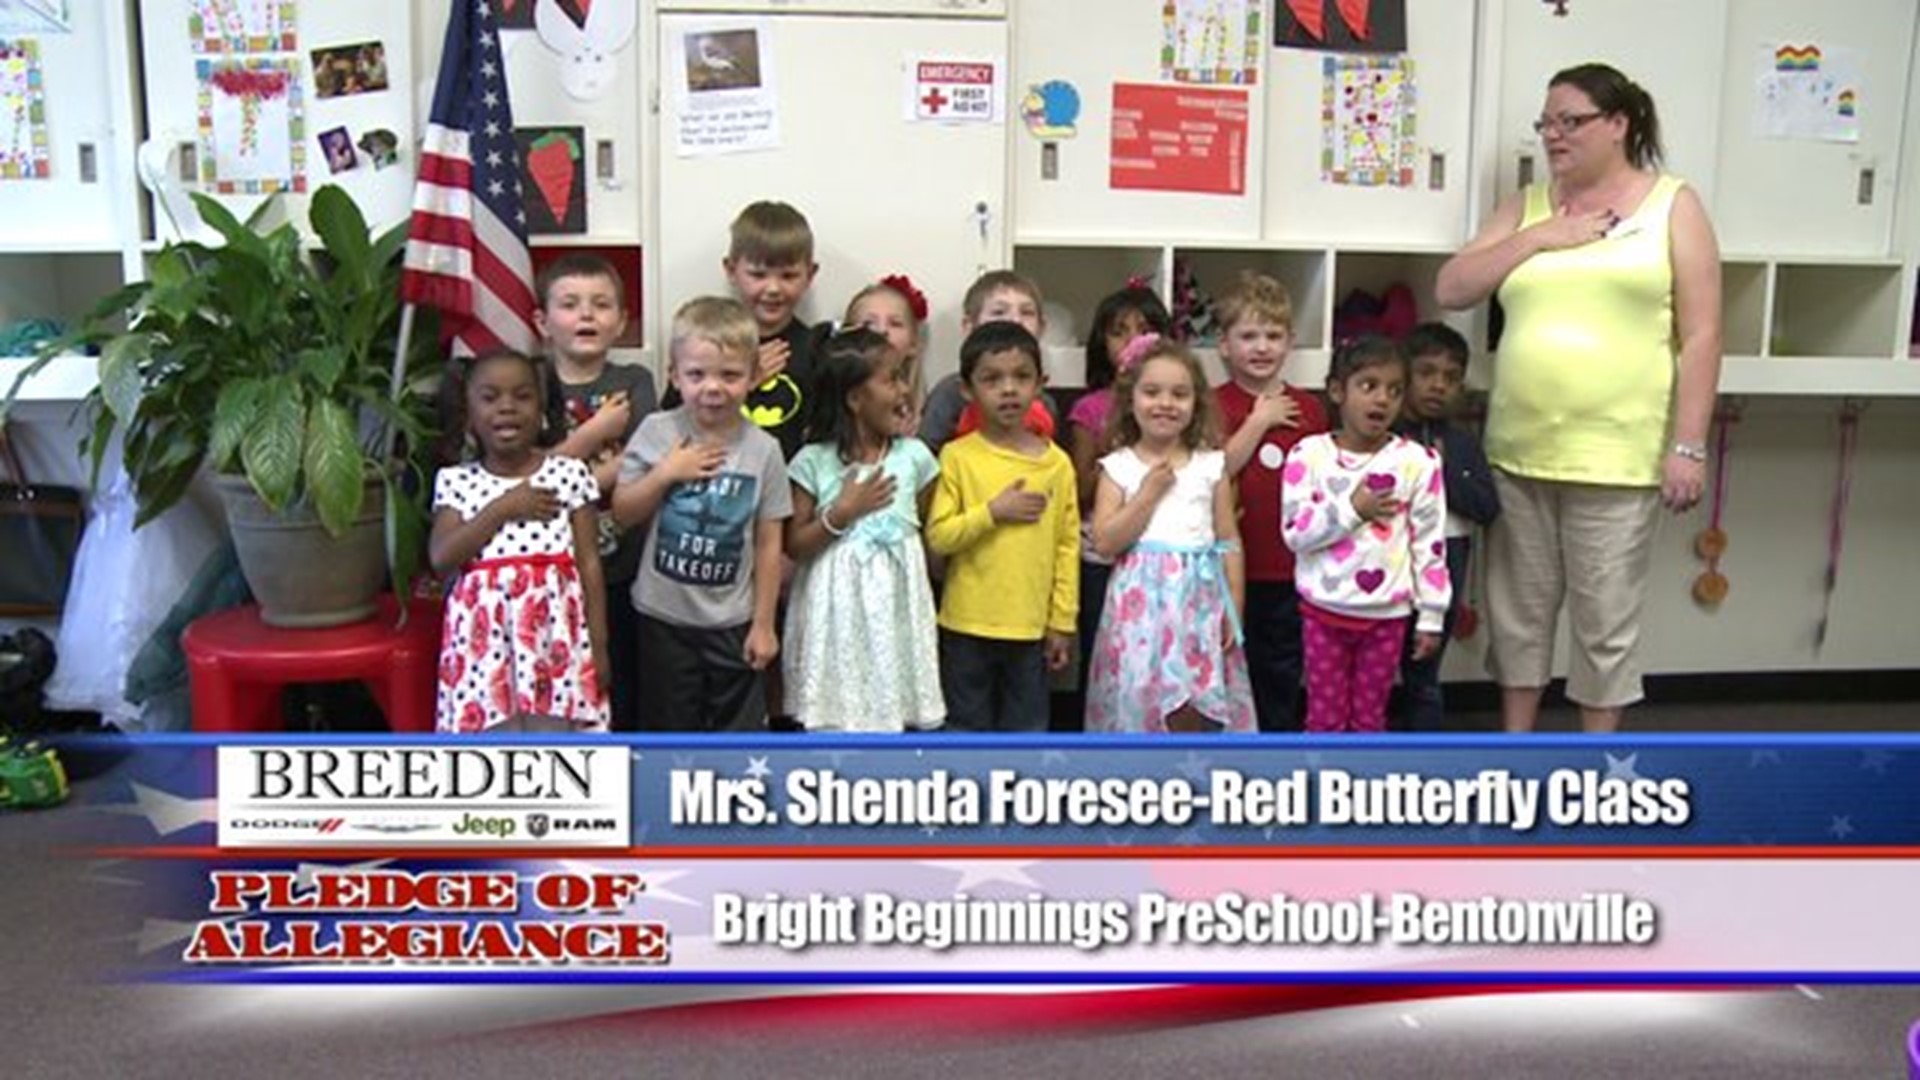 Bright Beginnings Preschool - Bentonville, Mrs. Foresee - Red Butterfly Class